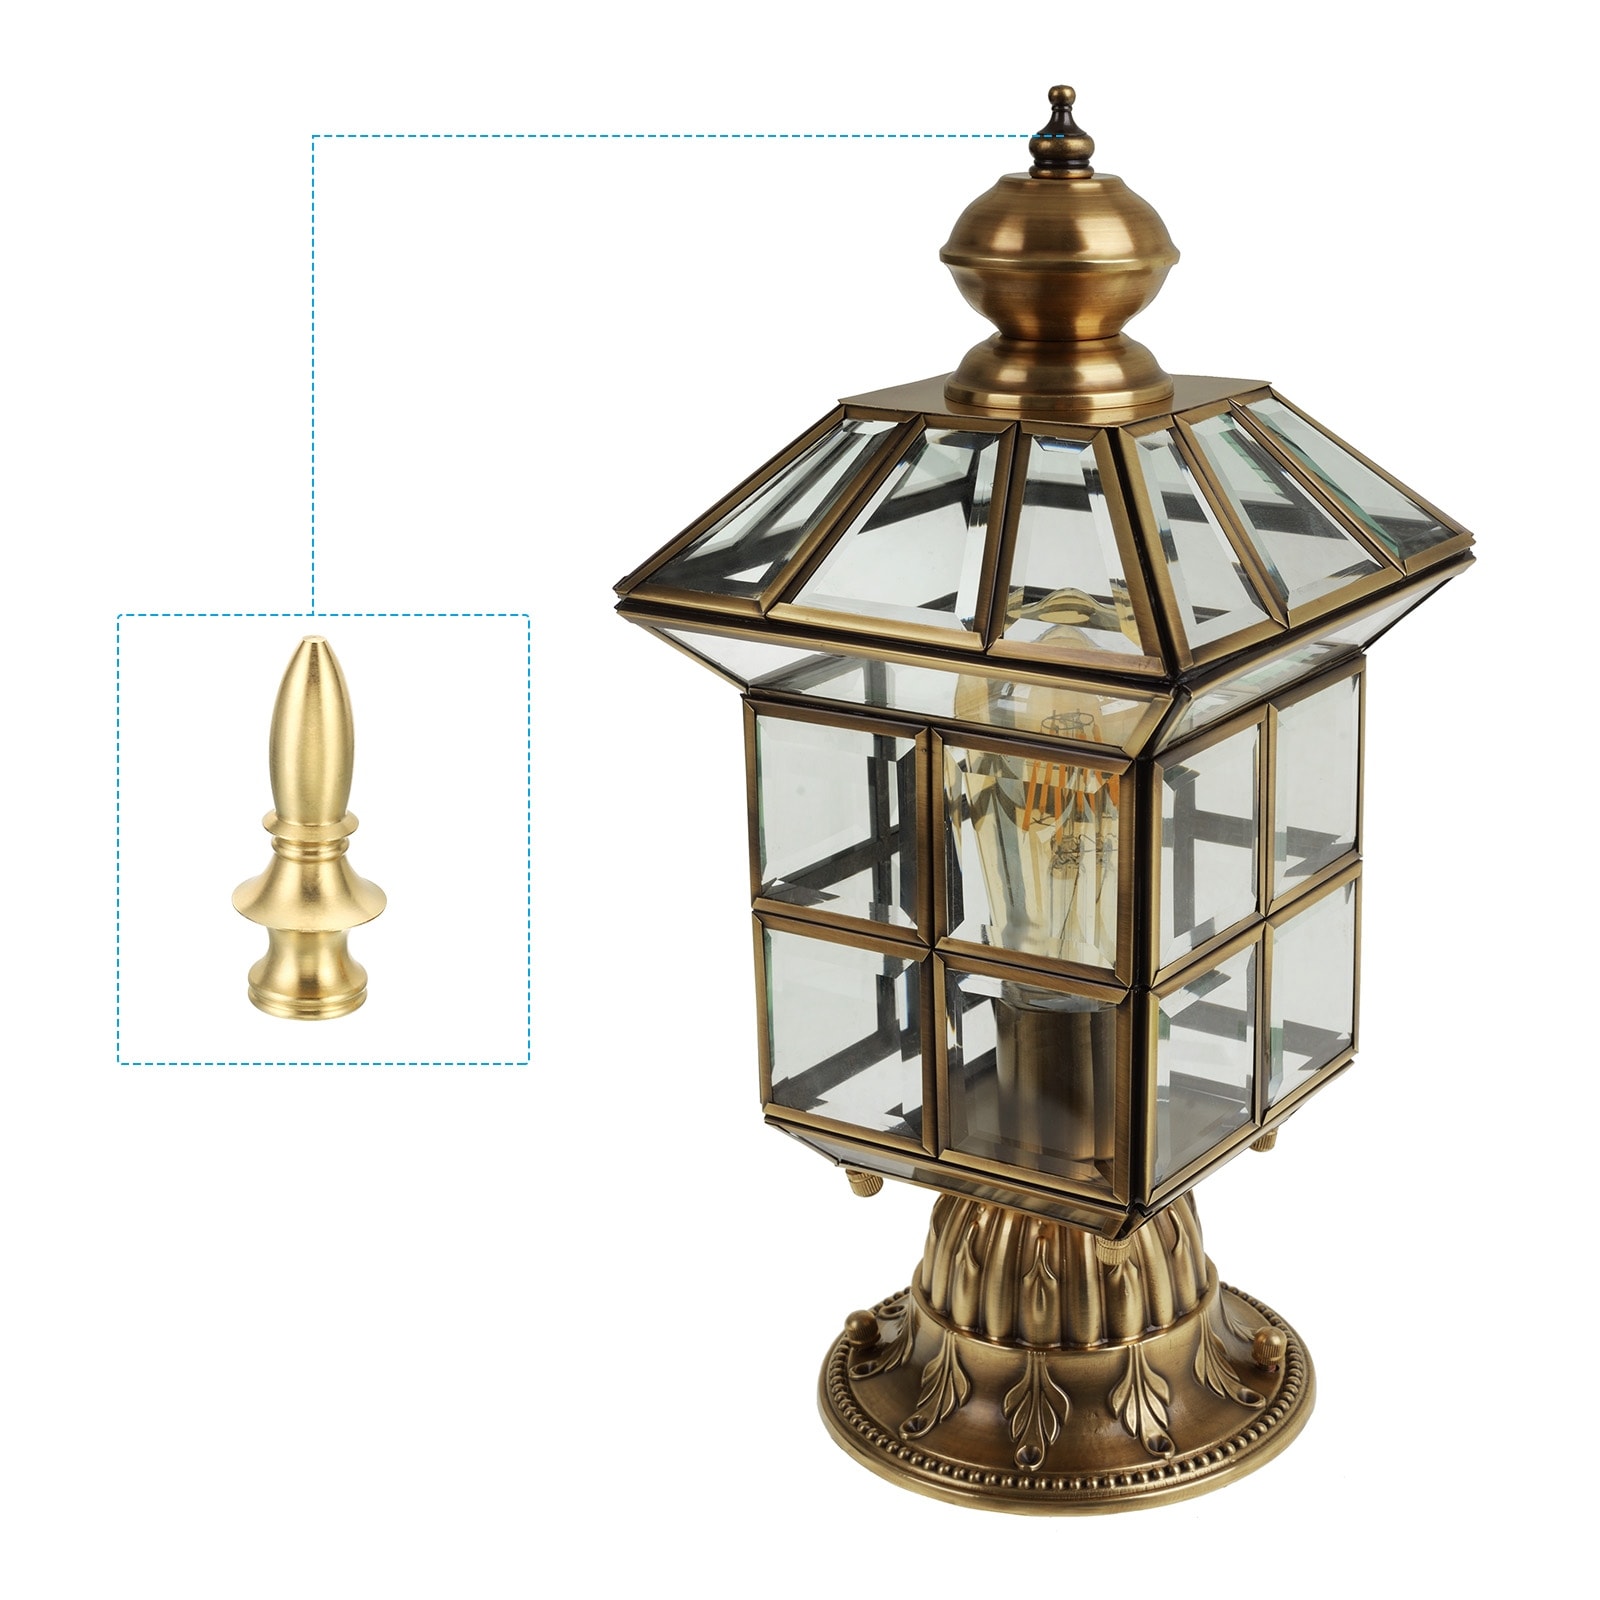 2set 2.1" Tall Brass Lamp Finials Lamp Shade Decoration Screw Cap Knob - Brass Tone